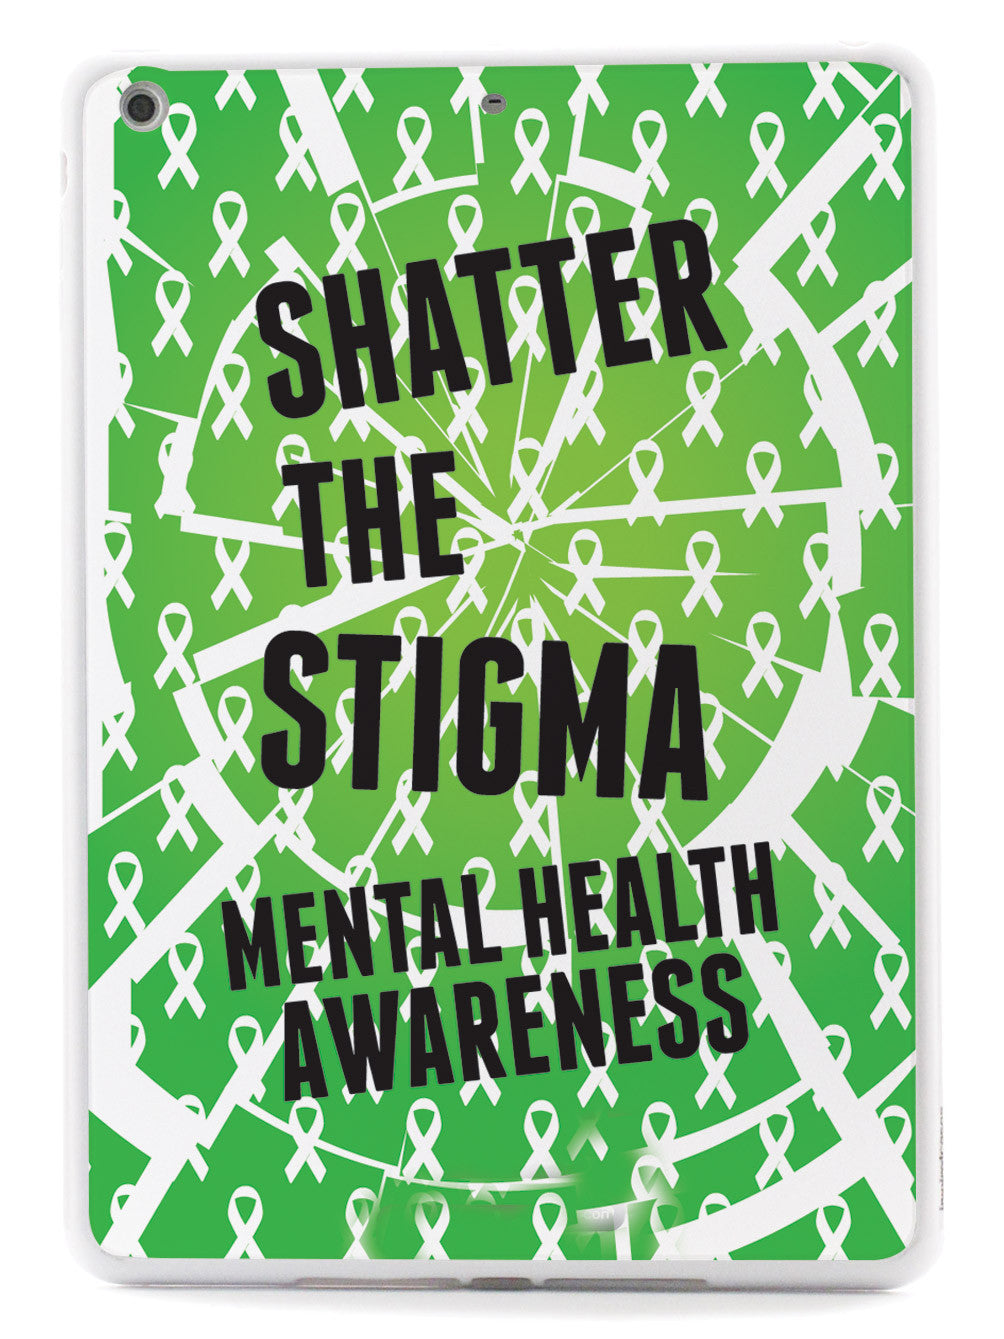 Shatter the Stigma - Mental Health Awareness Case